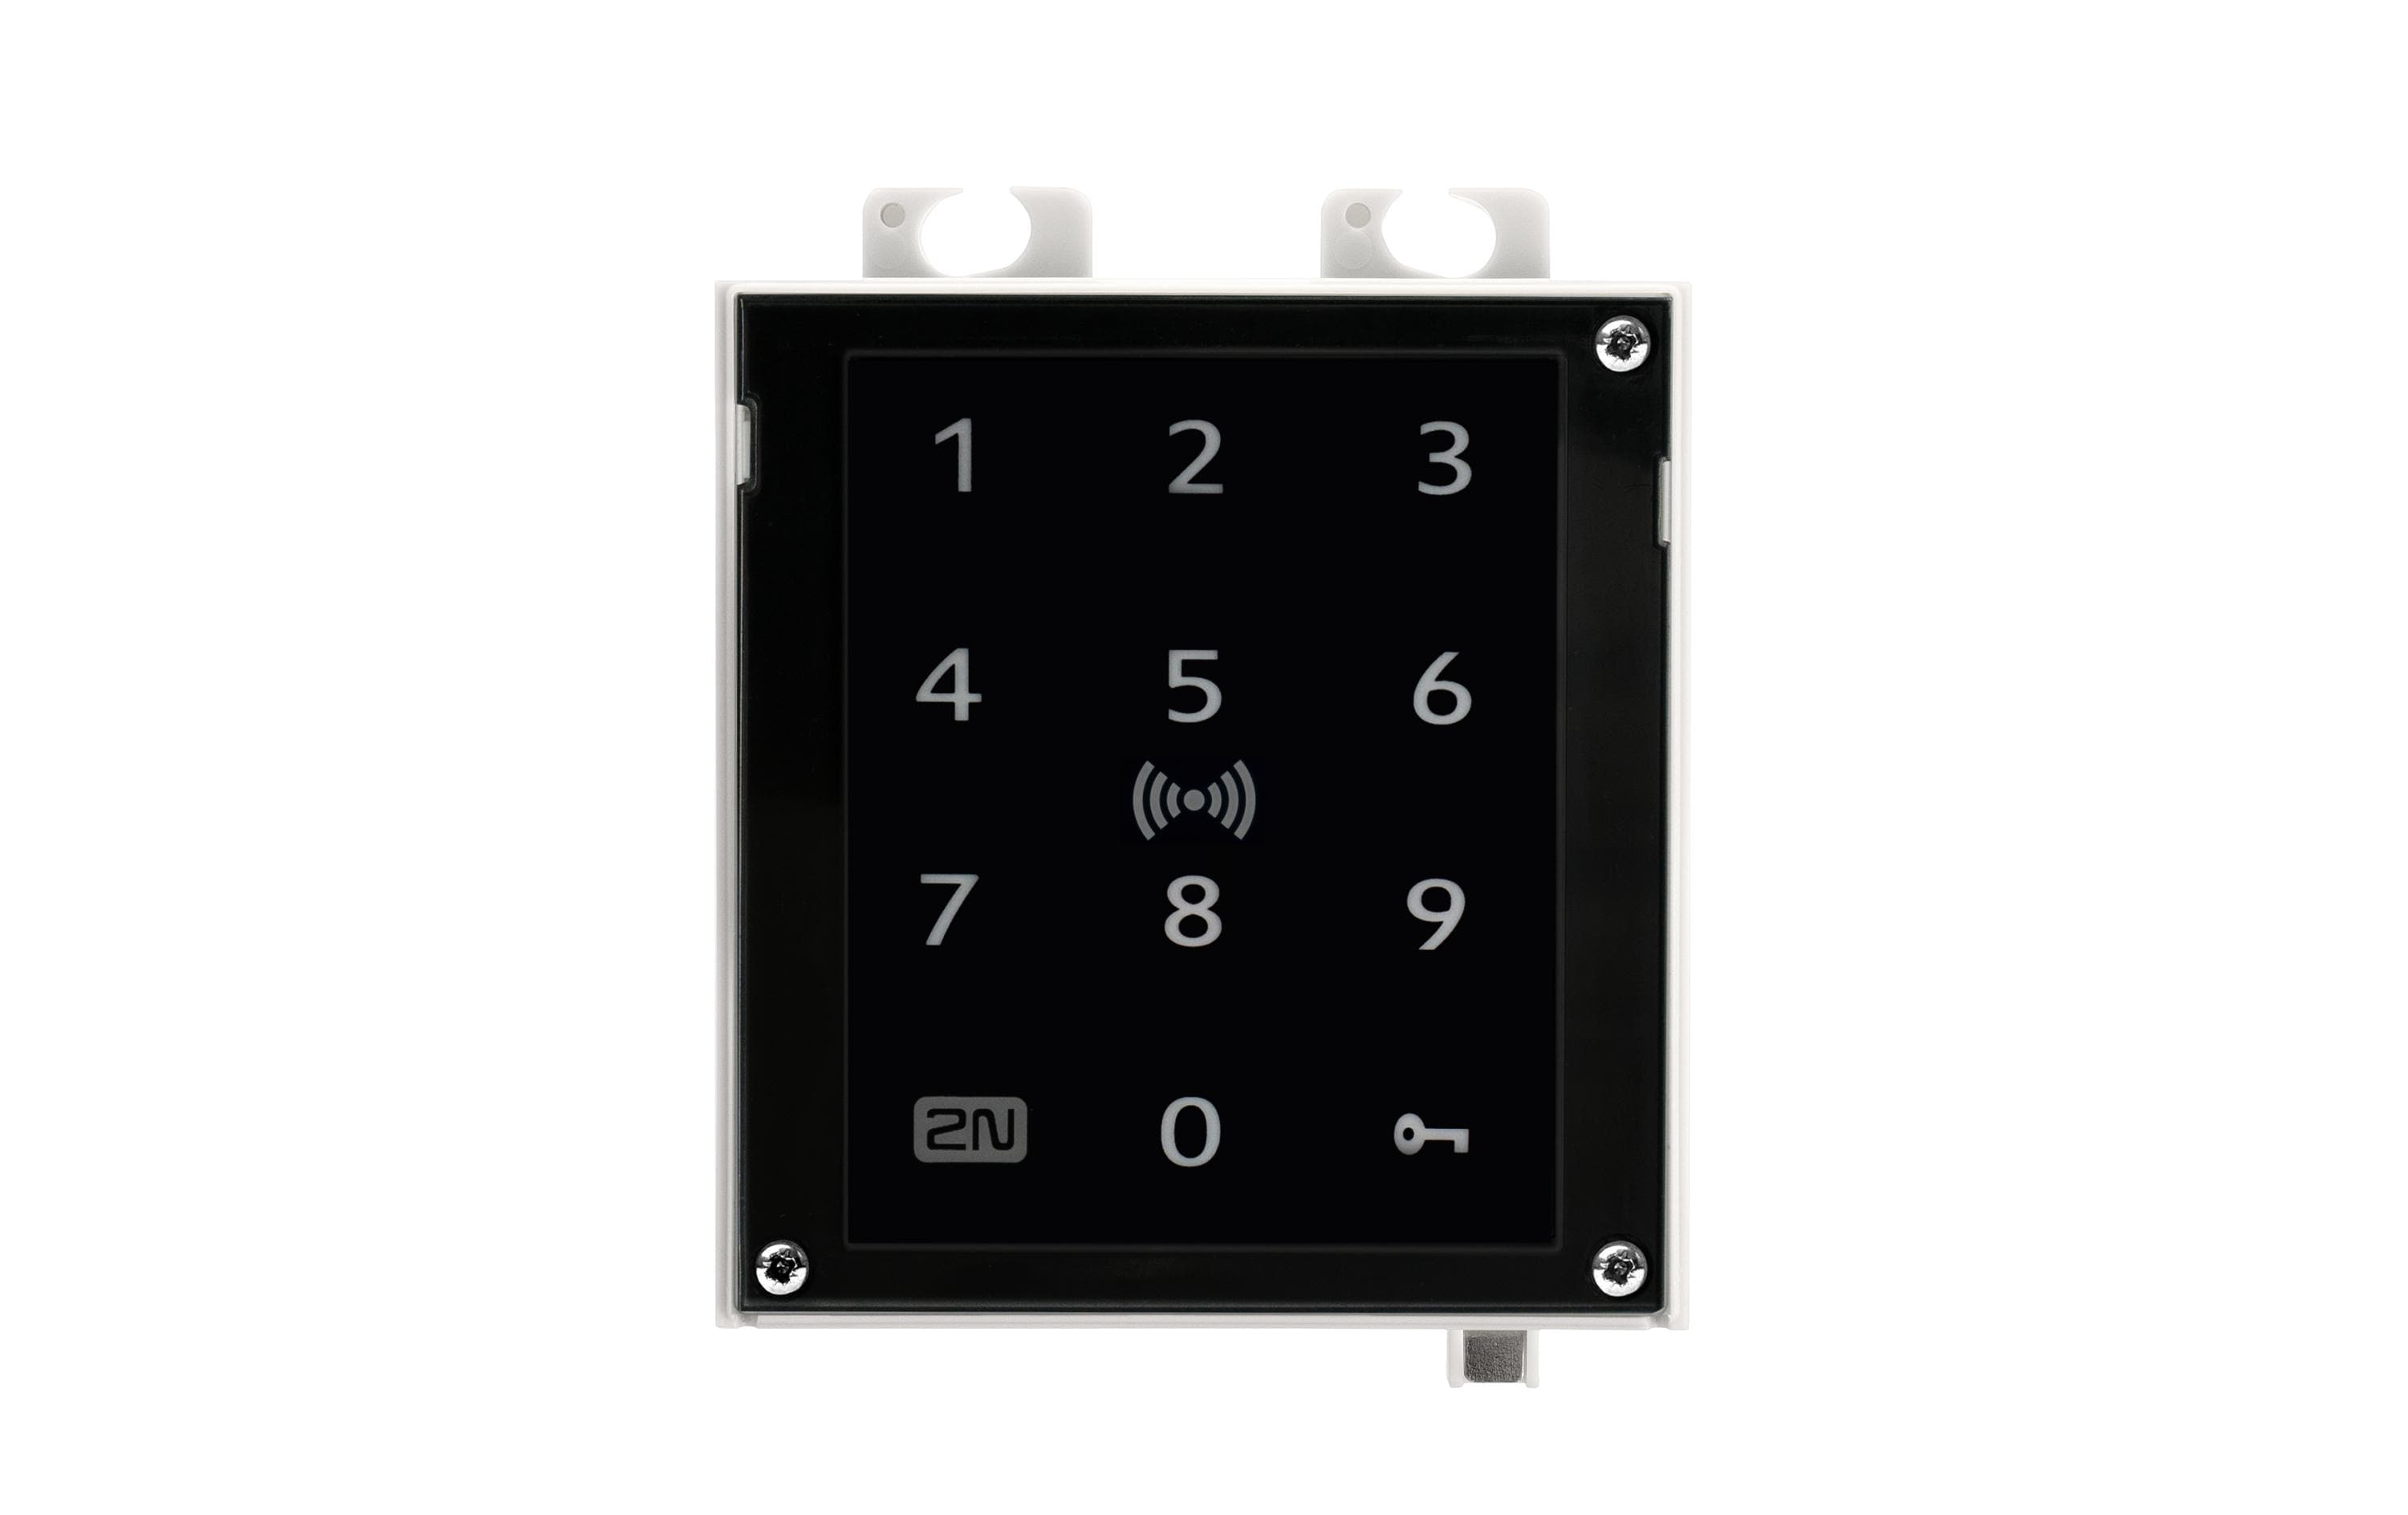 2N Multireader Access Unit 2.0 Touch Keypad & RFID Secured